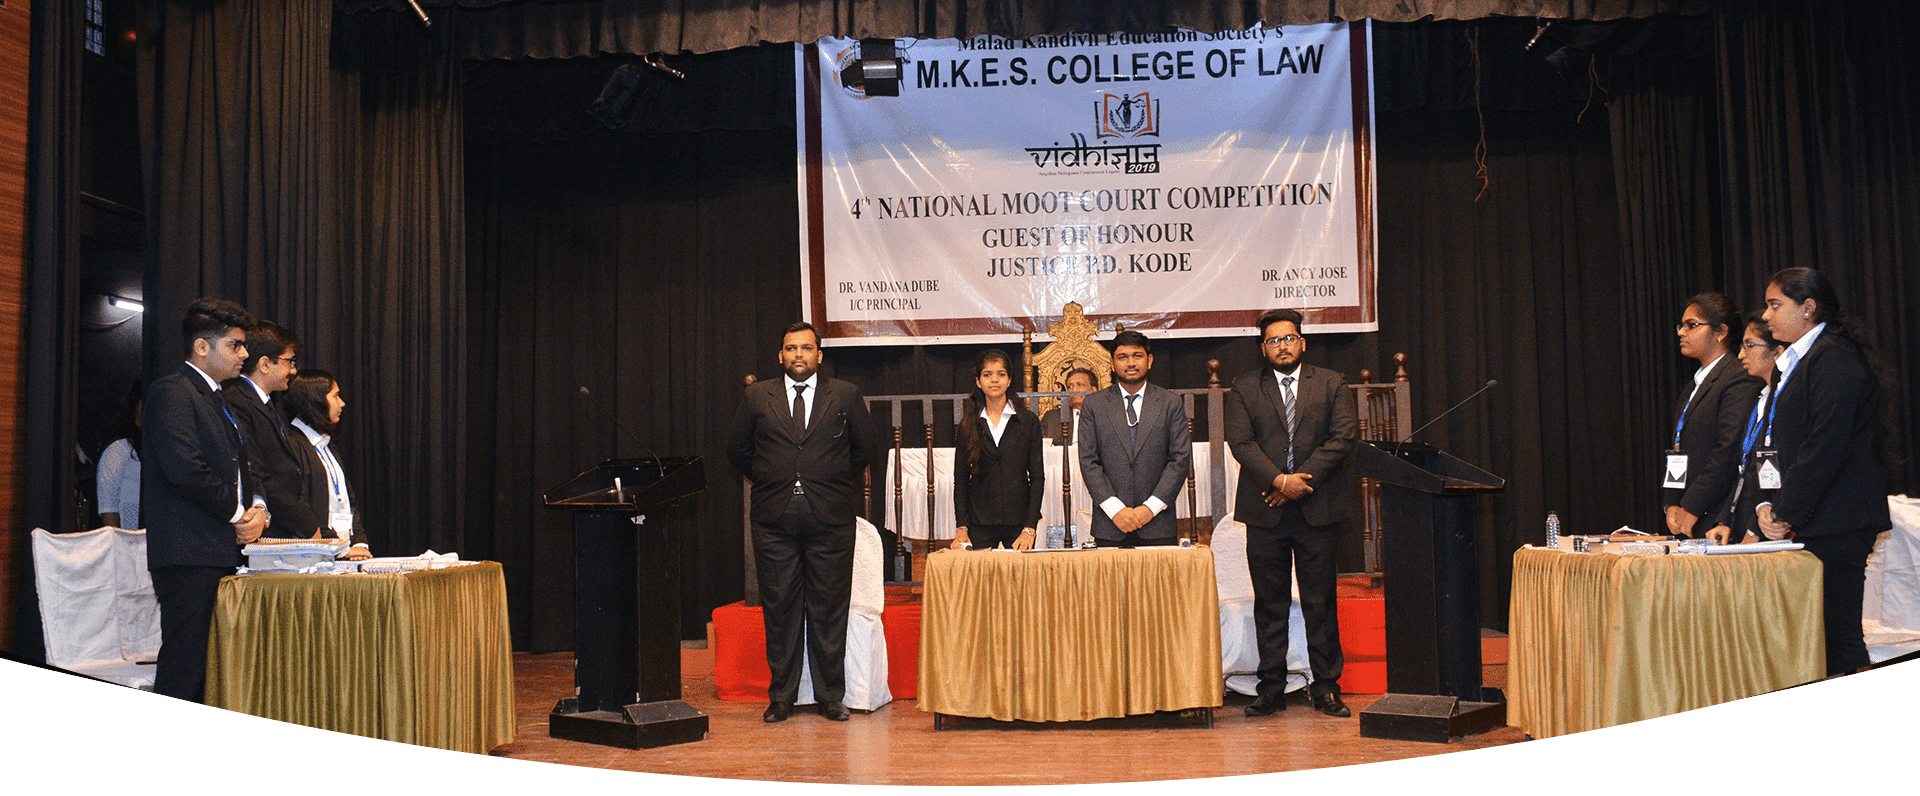 M.K.E.S College of Law. Mumbai Banner